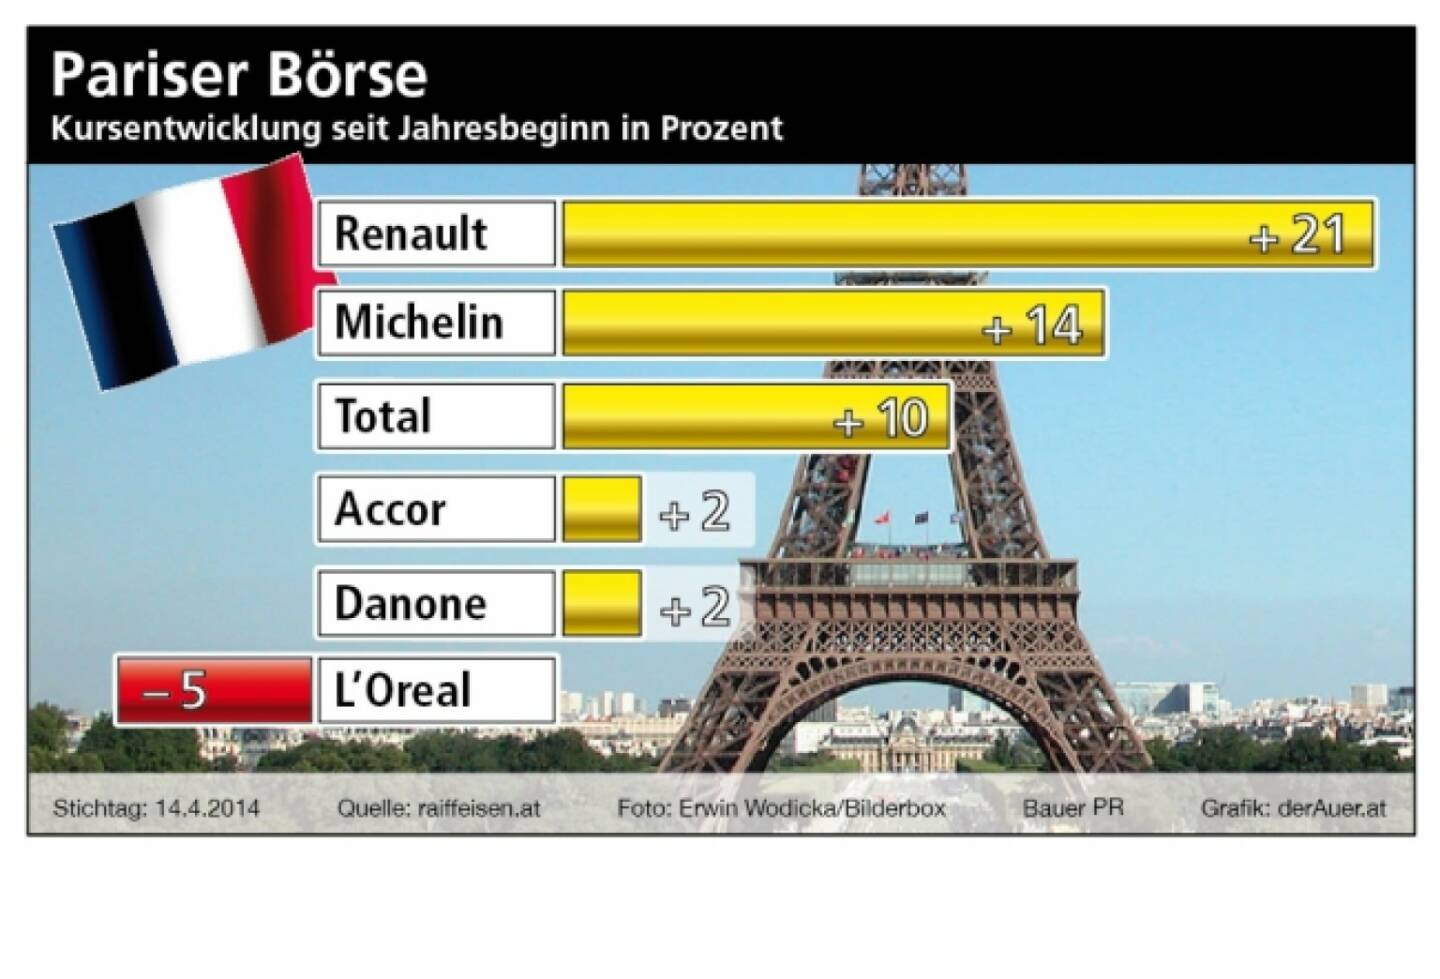 Renault, Michelin, Total, Accor, Danone, L'Oreal (Raiffeisen, derauer.at)